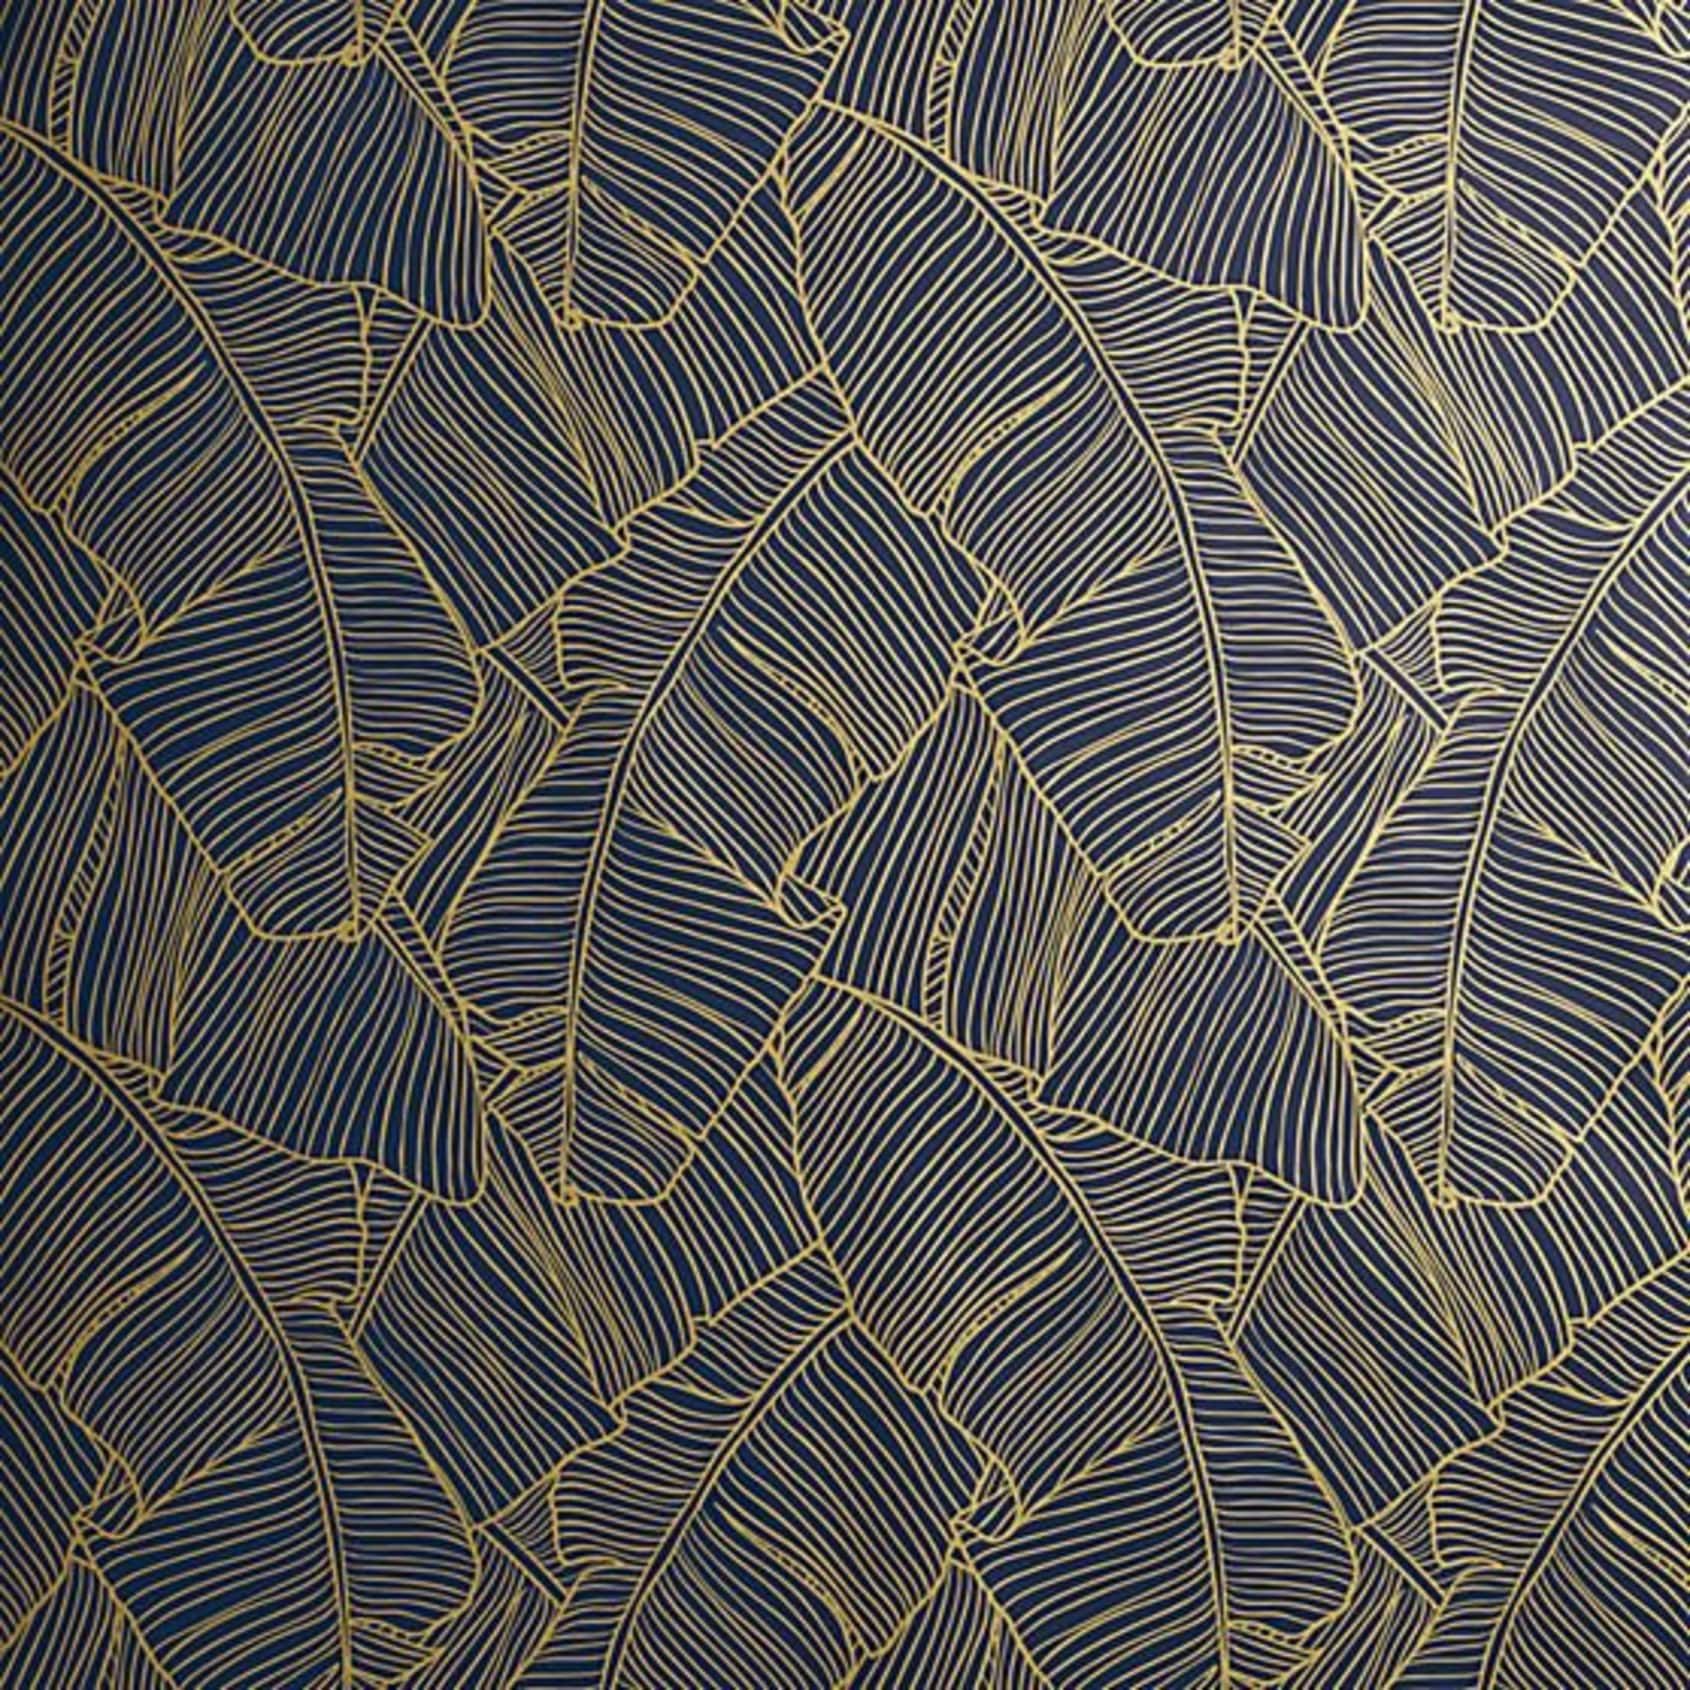 black and white wallpaper designs,pattern,leaf,design,line,organism